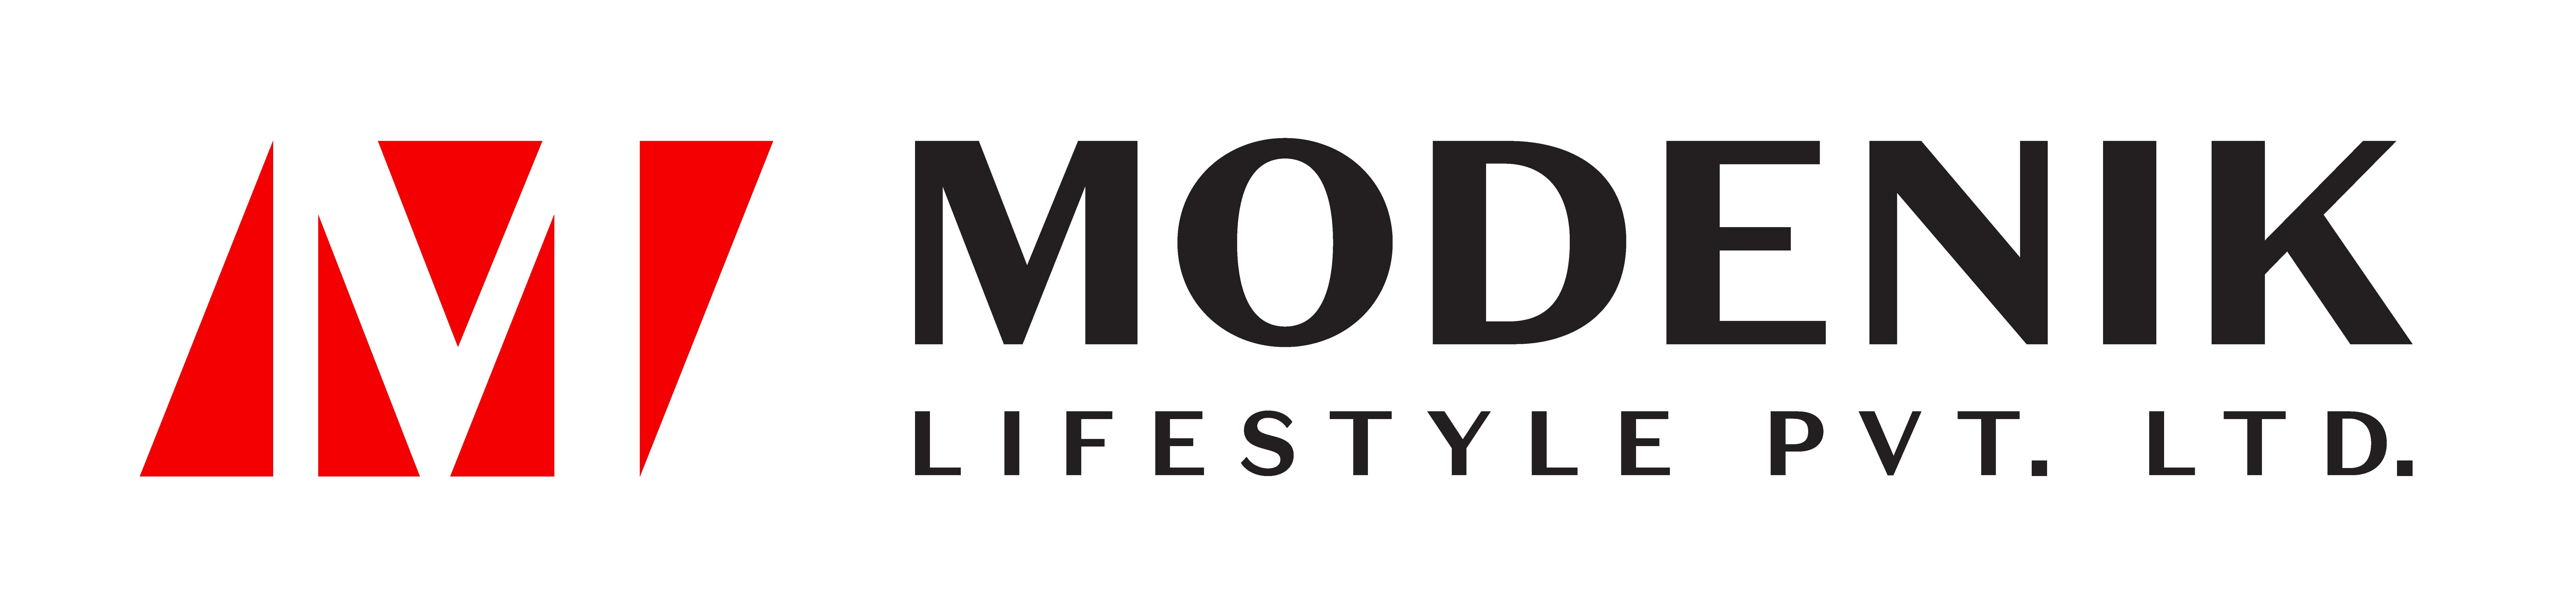 Modenik Lifestyle Pvt Ltd